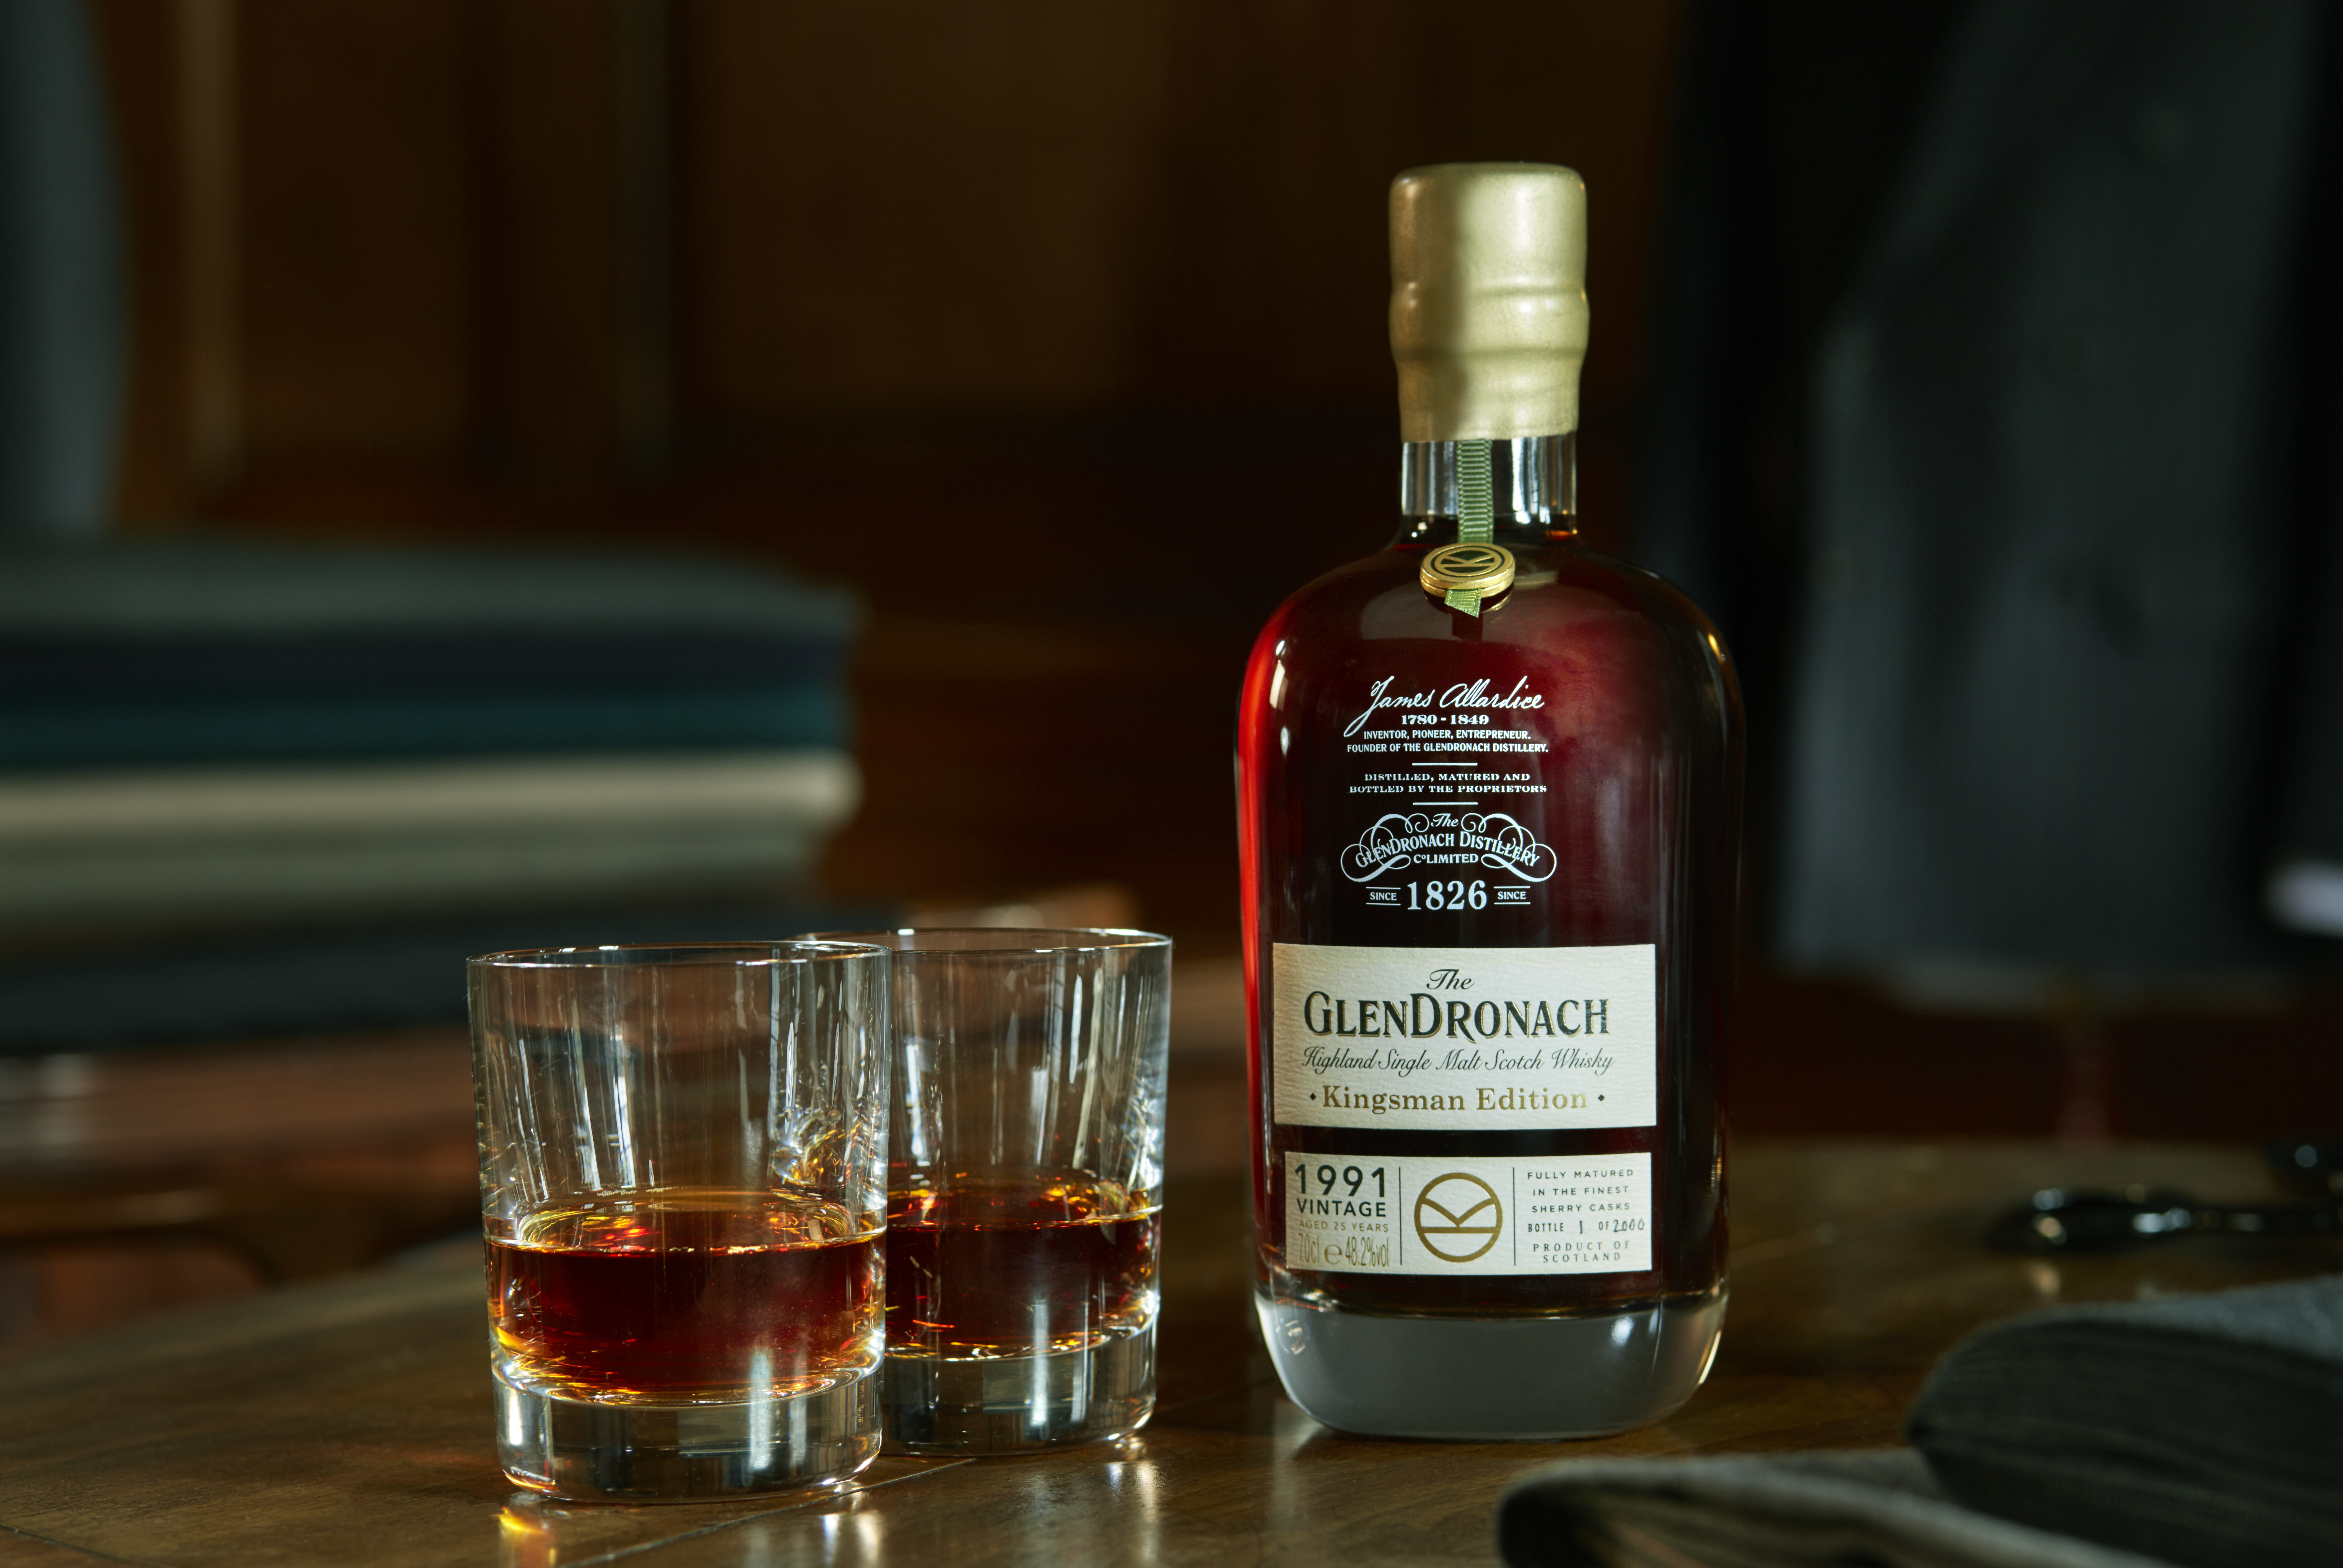 The Glendronach’s exclusive Kingsman single malt scotch